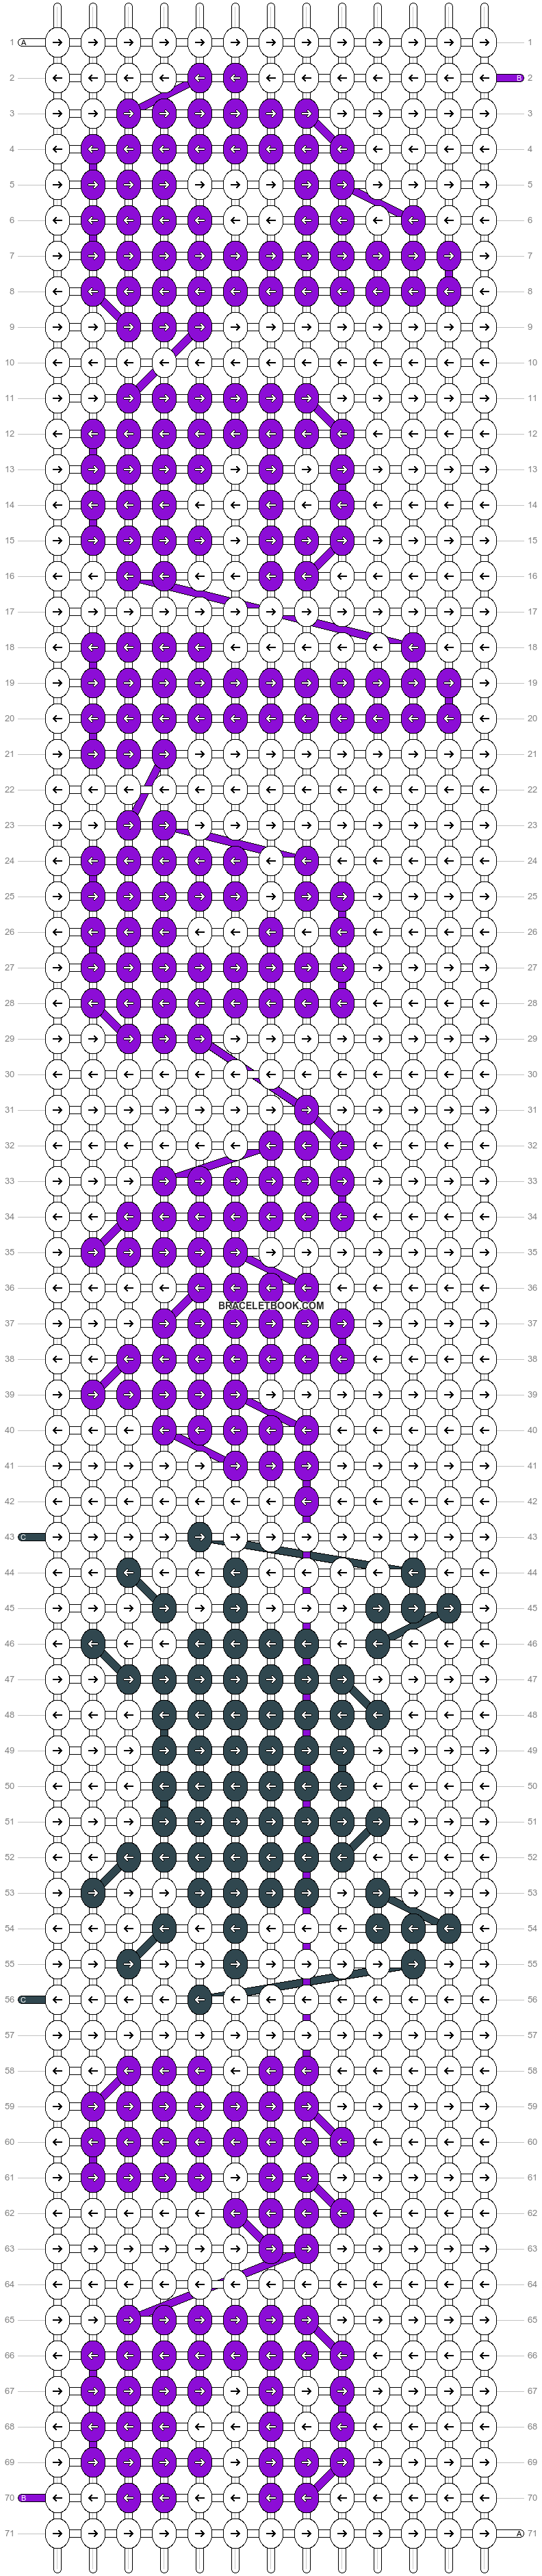 Alpha pattern #55146 variation #95243 pattern